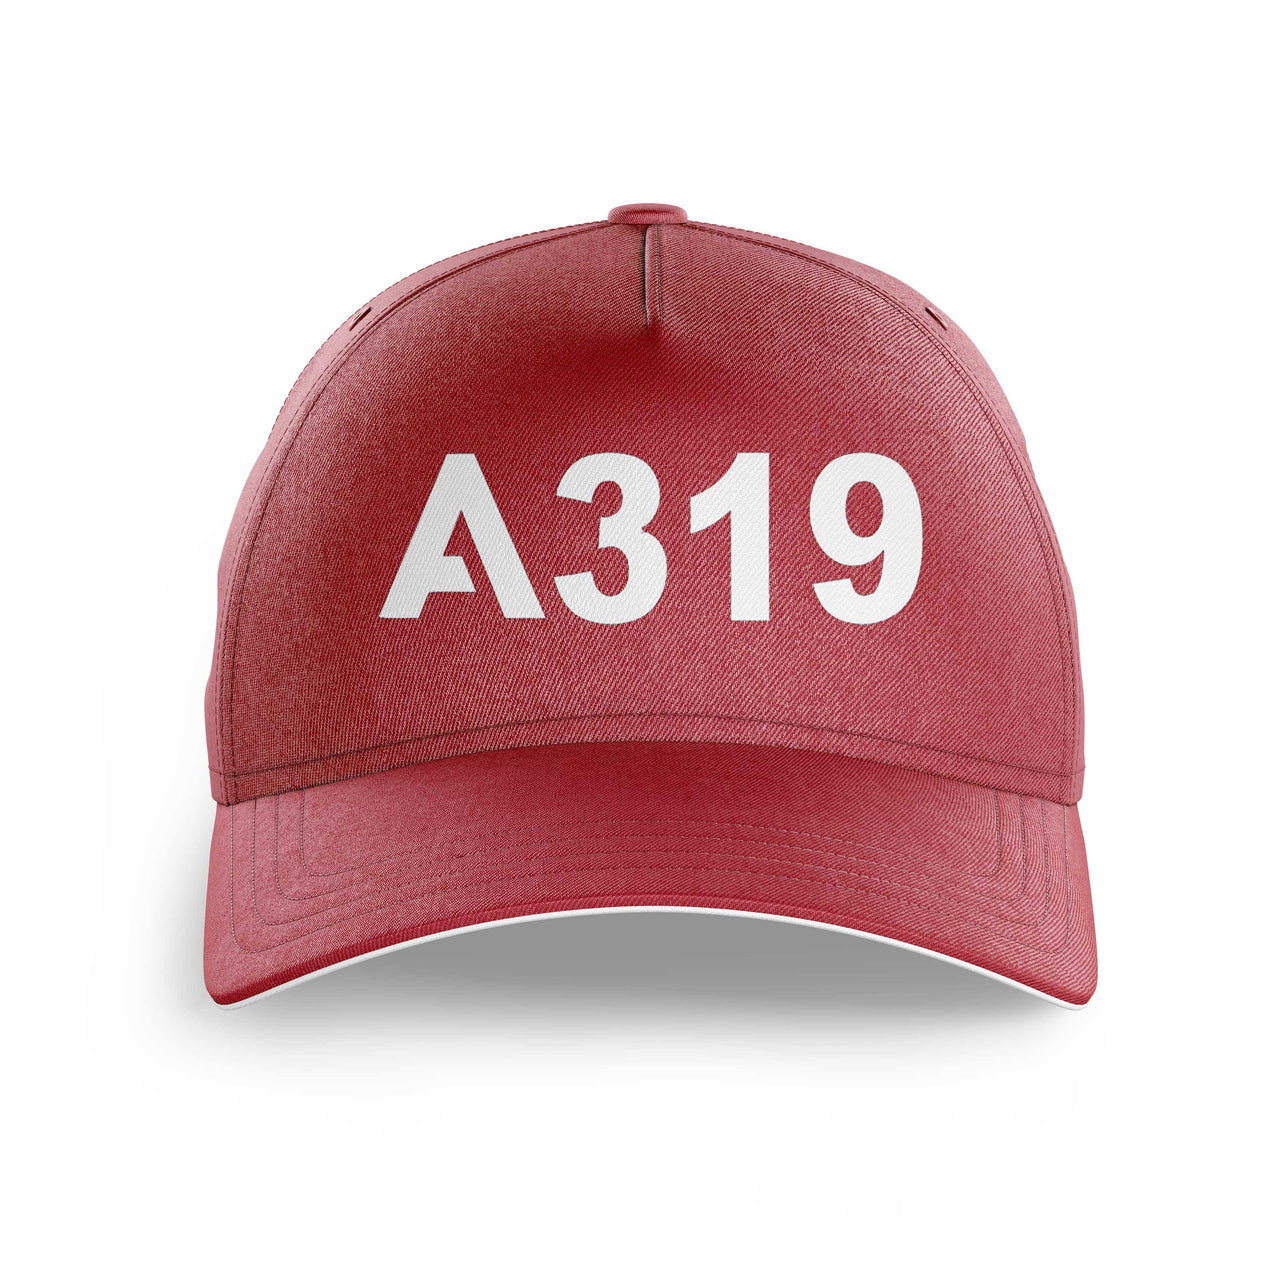 A319 Flat Text Printed Hats